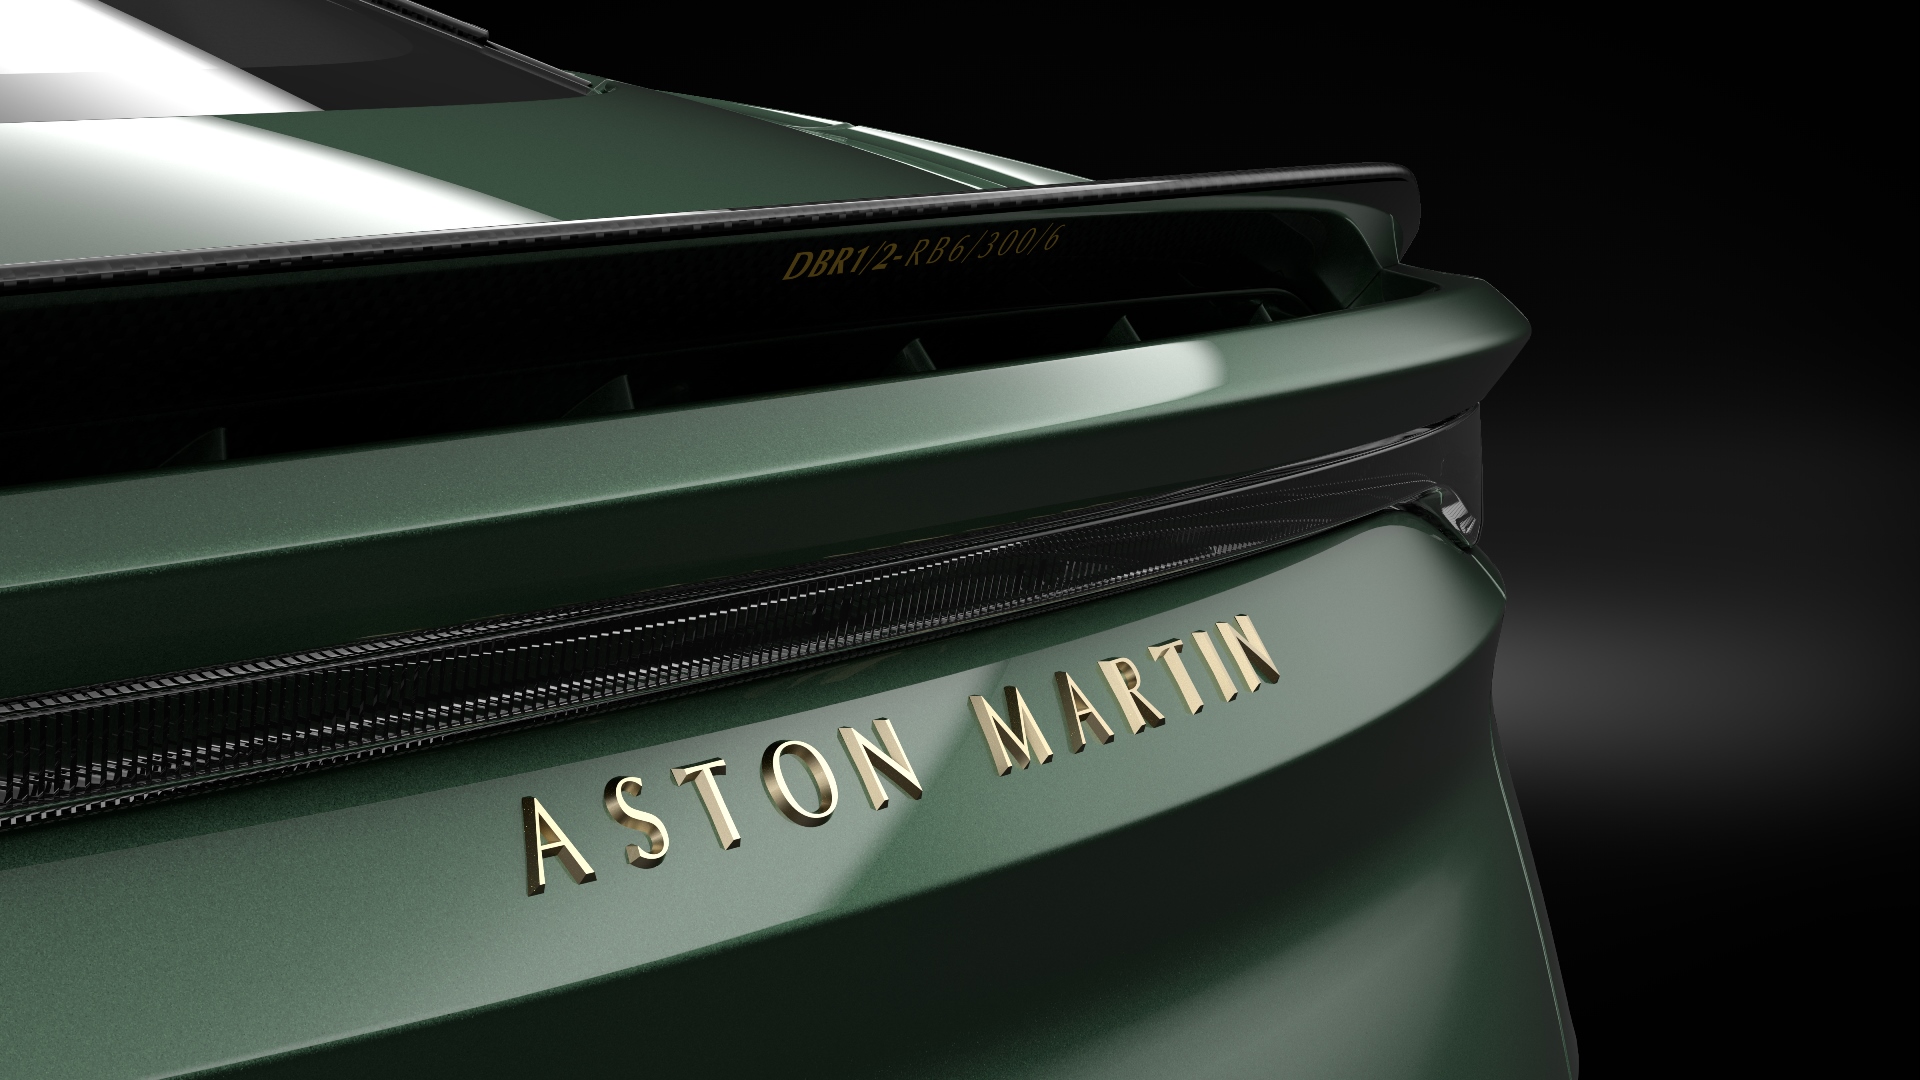 DBS 59 - Page 6 - Aston Martin - PistonHeads